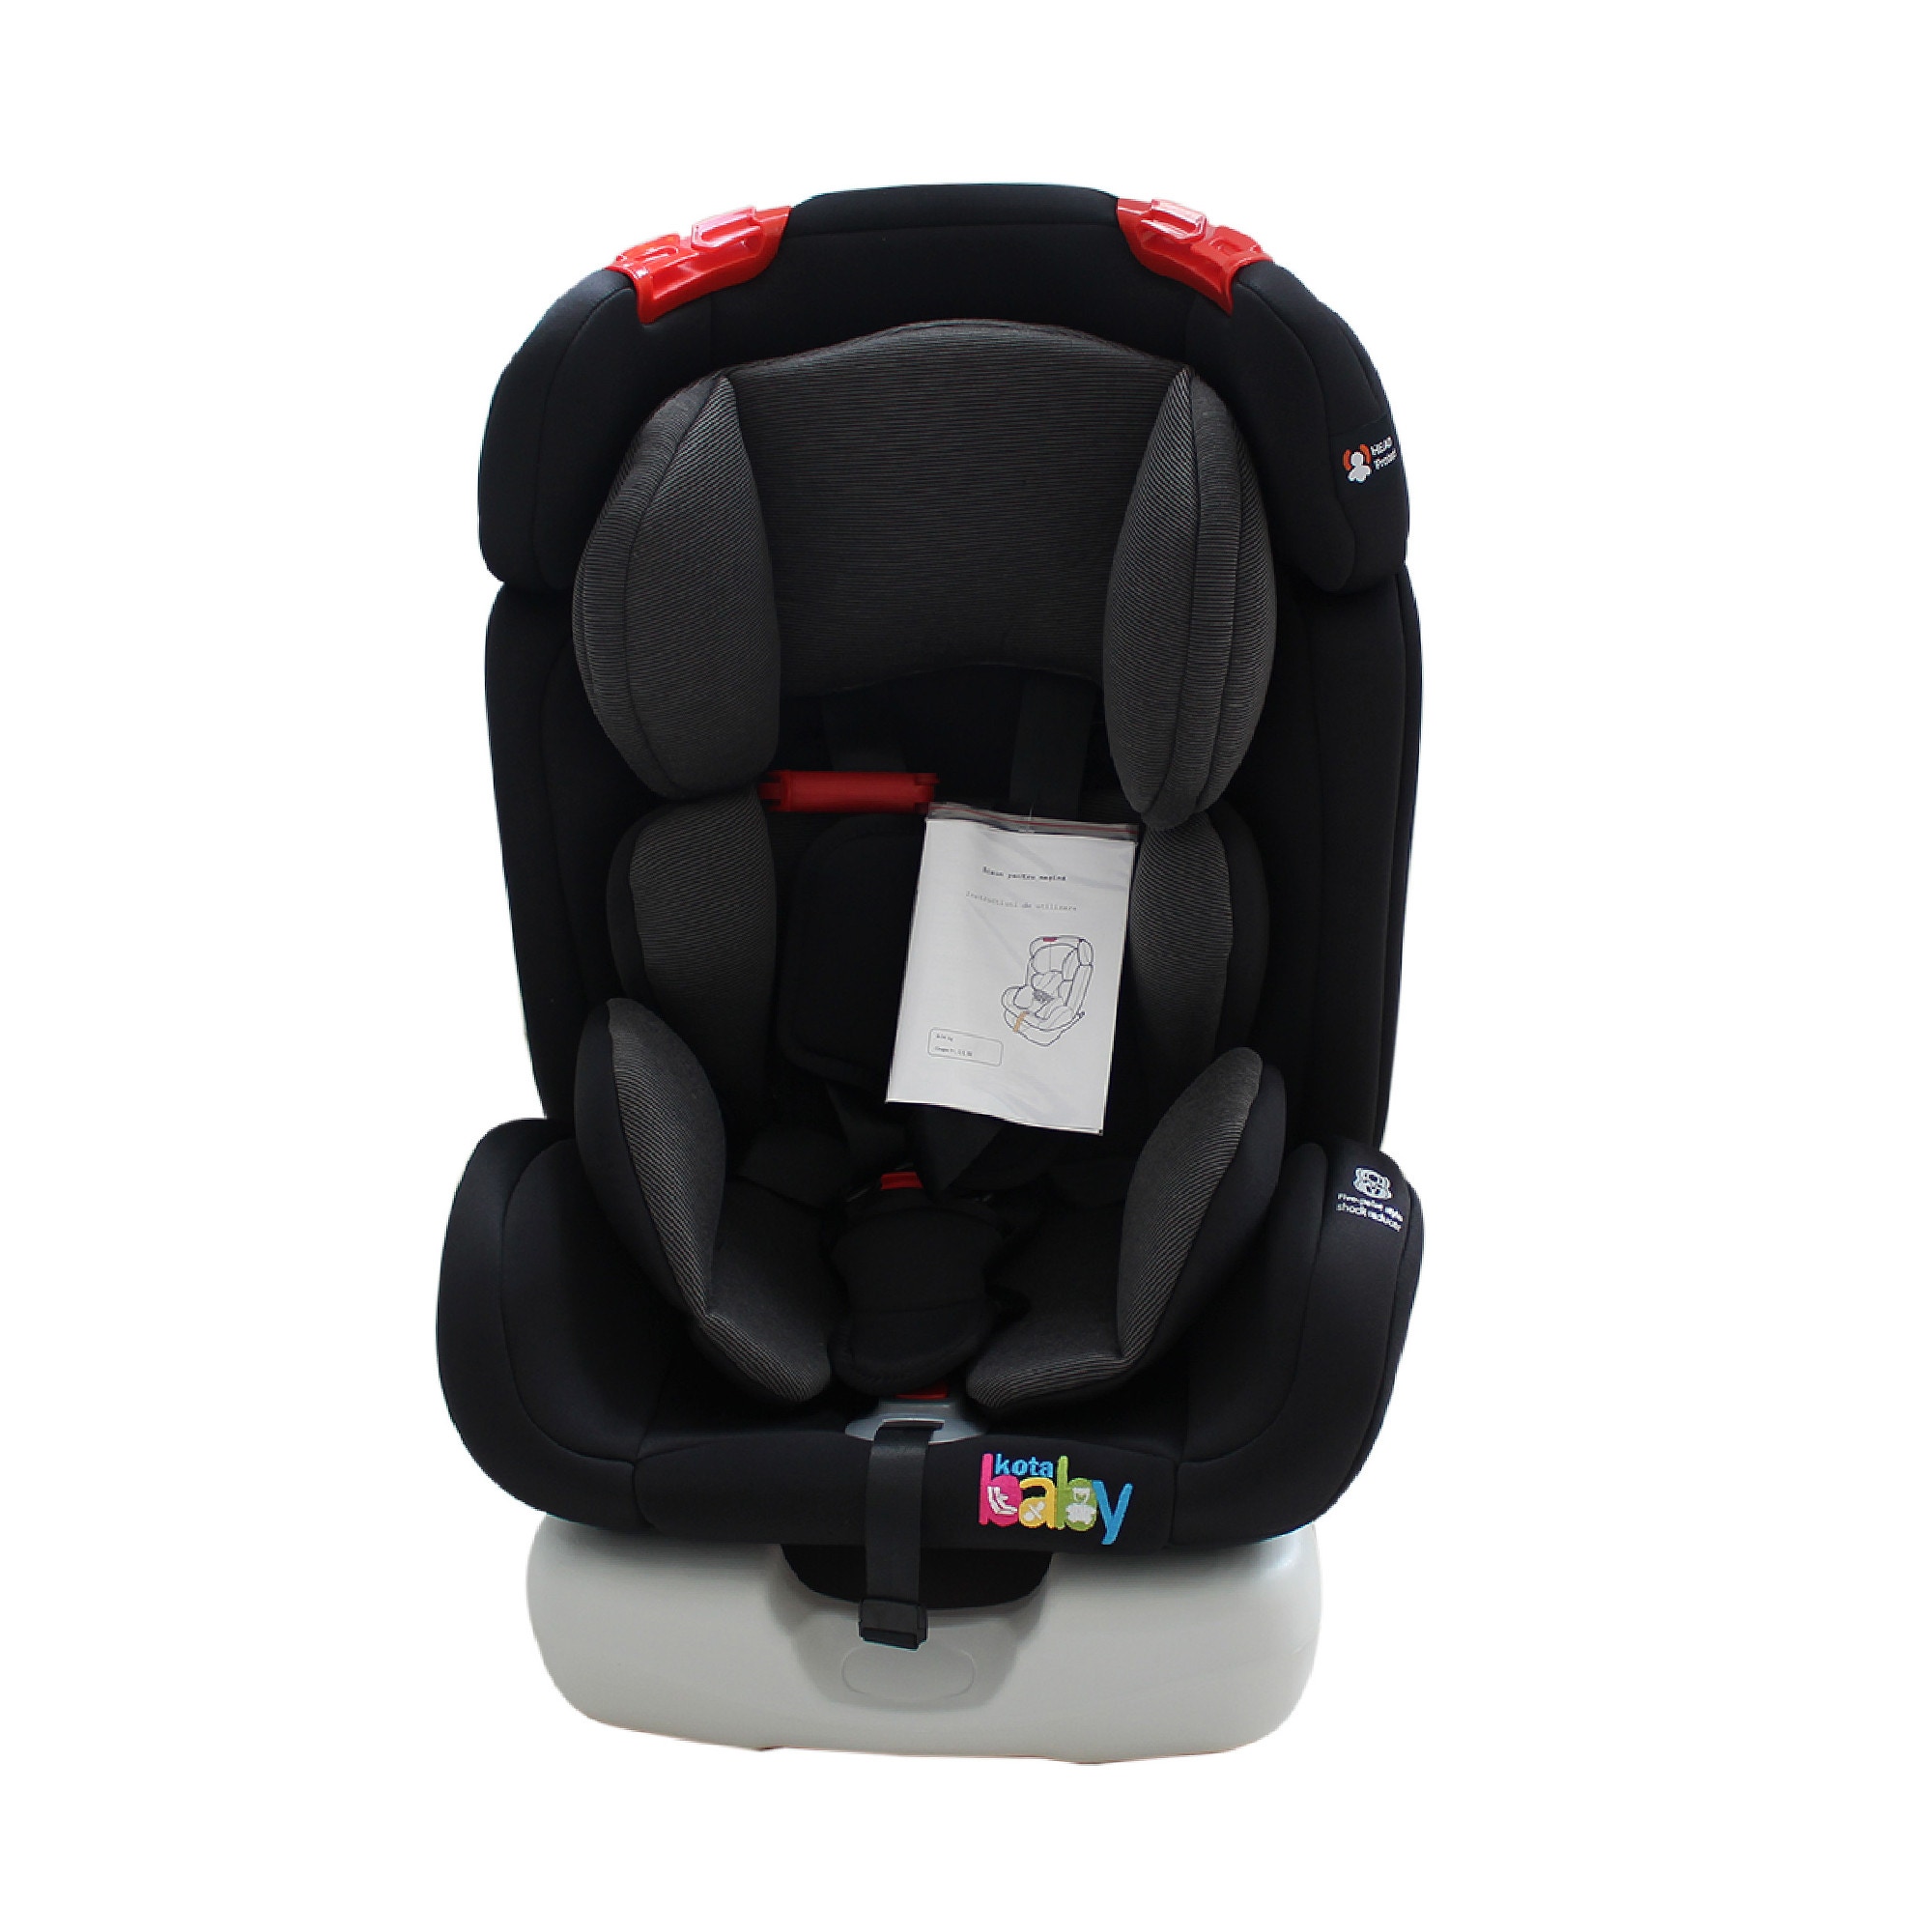 Scaun auto pentru copii, Kota Baby Diangelo KB401, negru/rosu, 0-36 kg, 0-12 ani, sistem Isofix